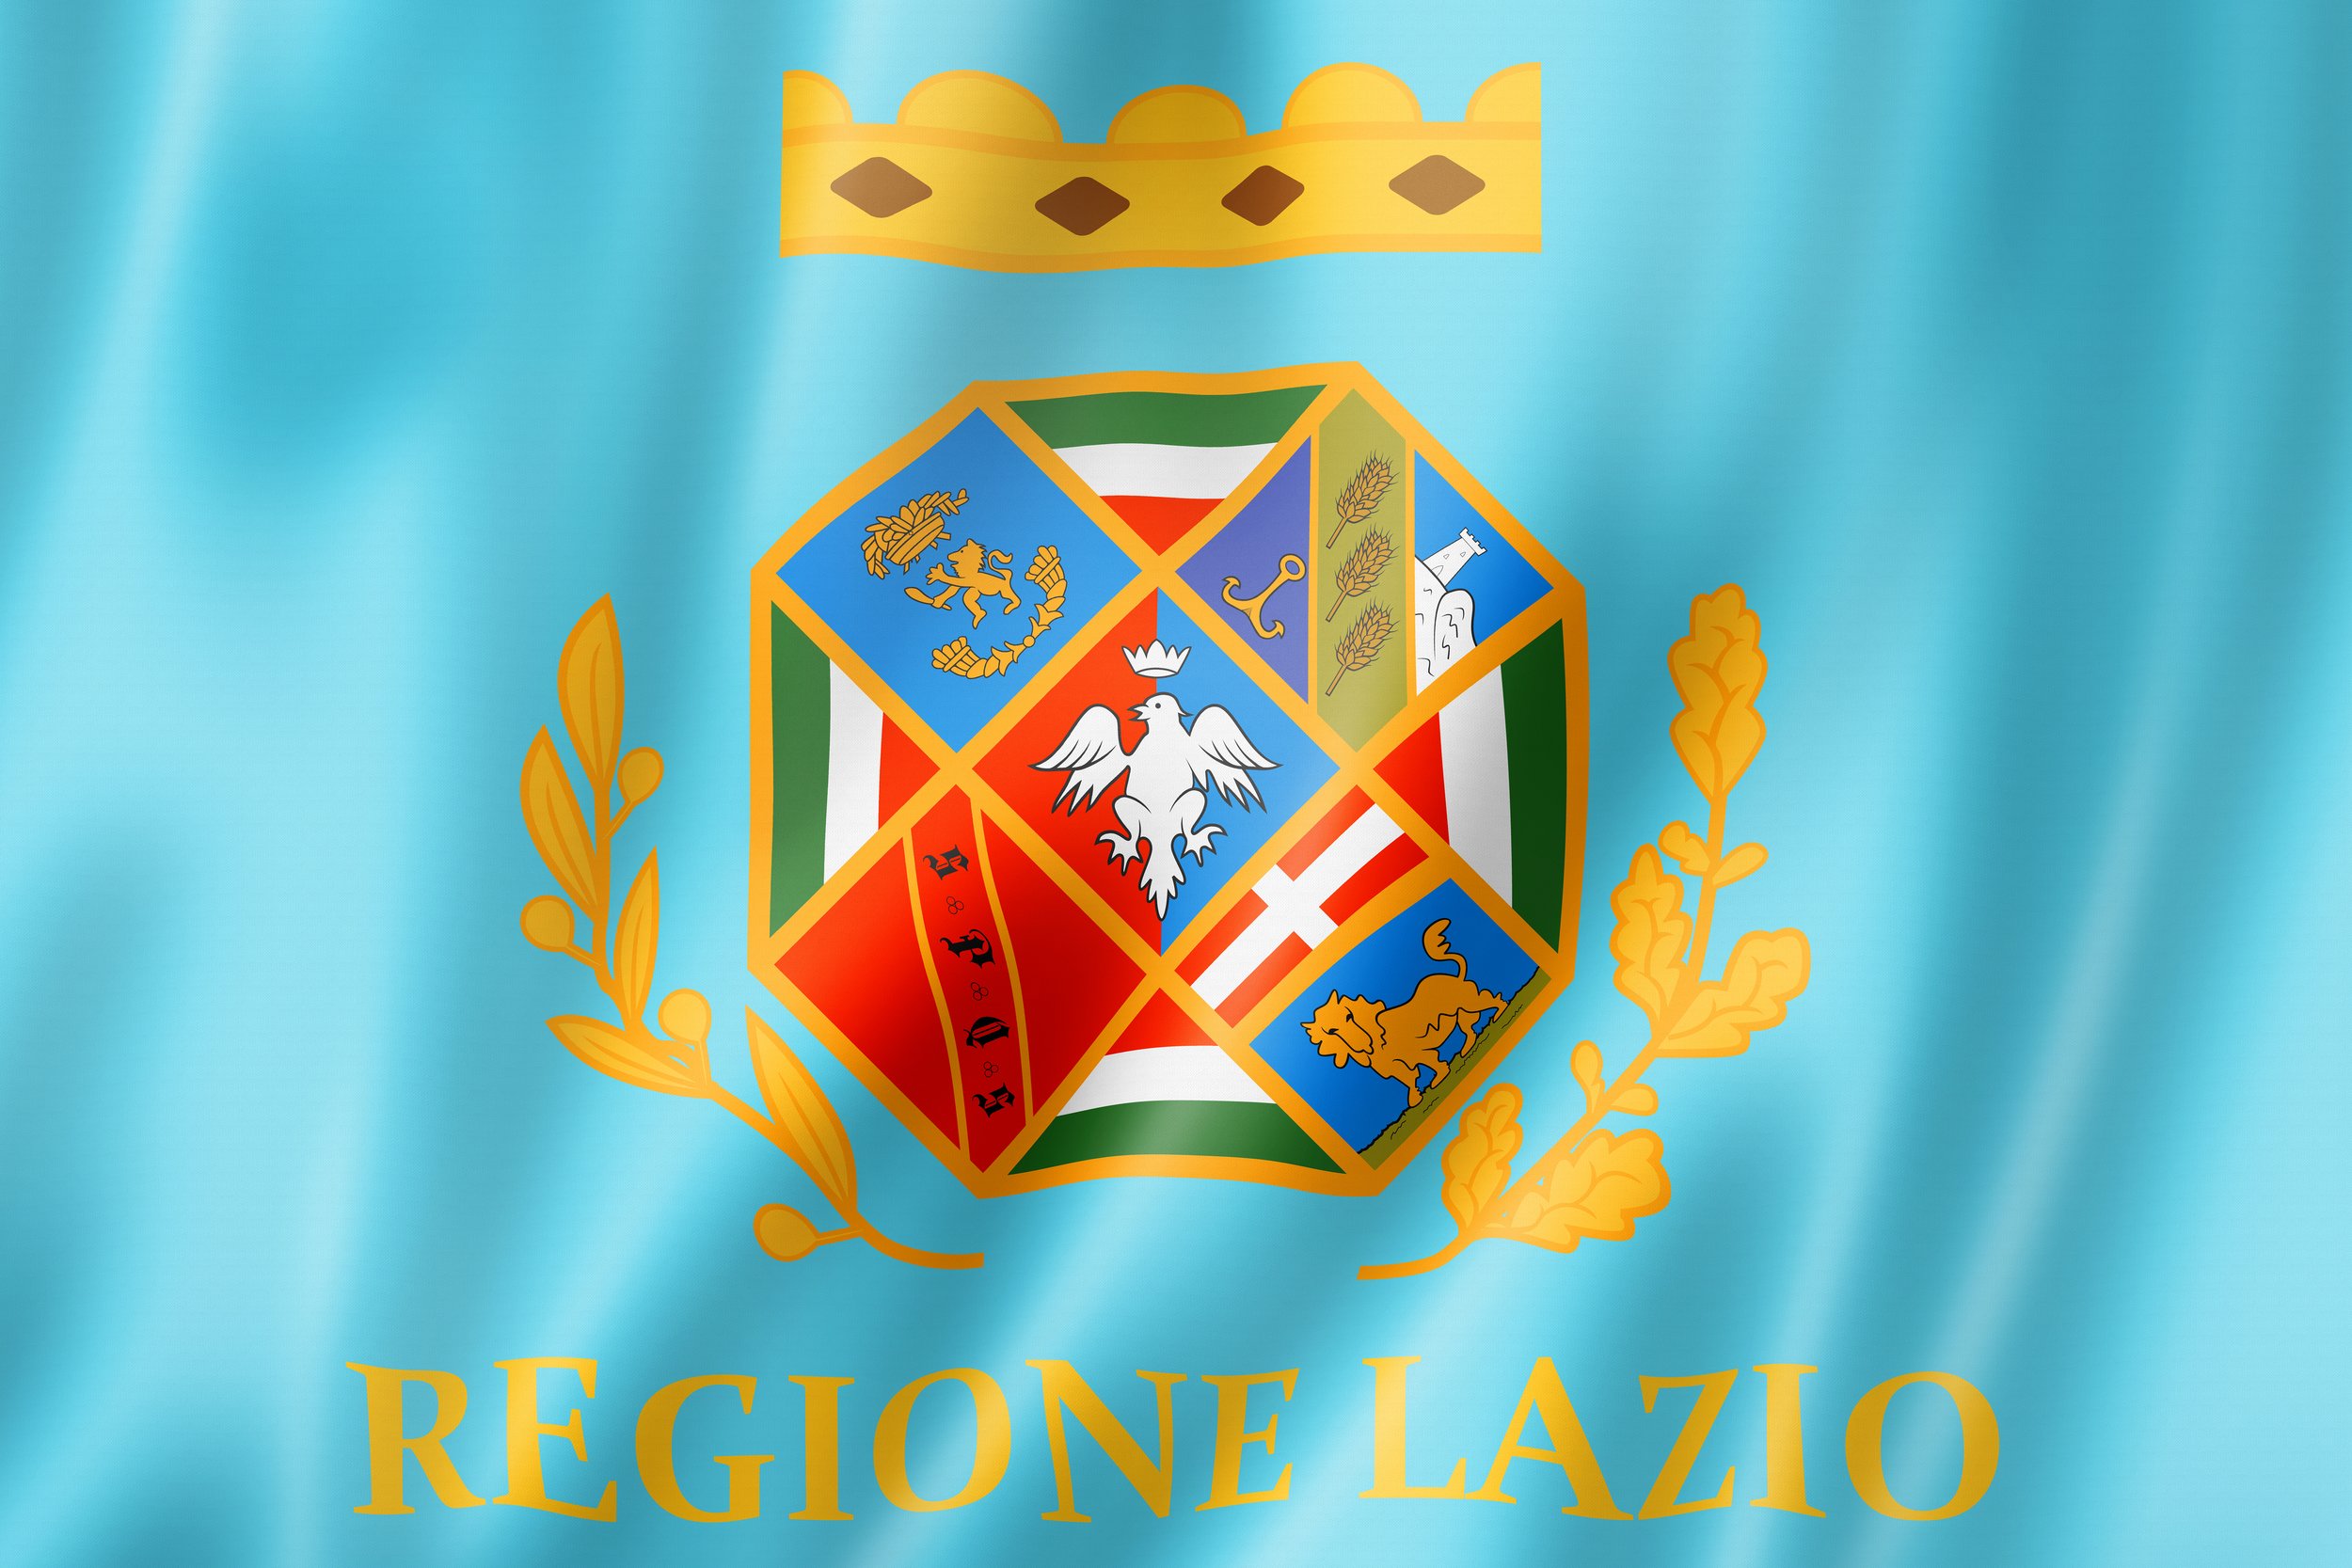 lazio-region-flag-italy-waving-banner-collection-3d-illustration.jpg